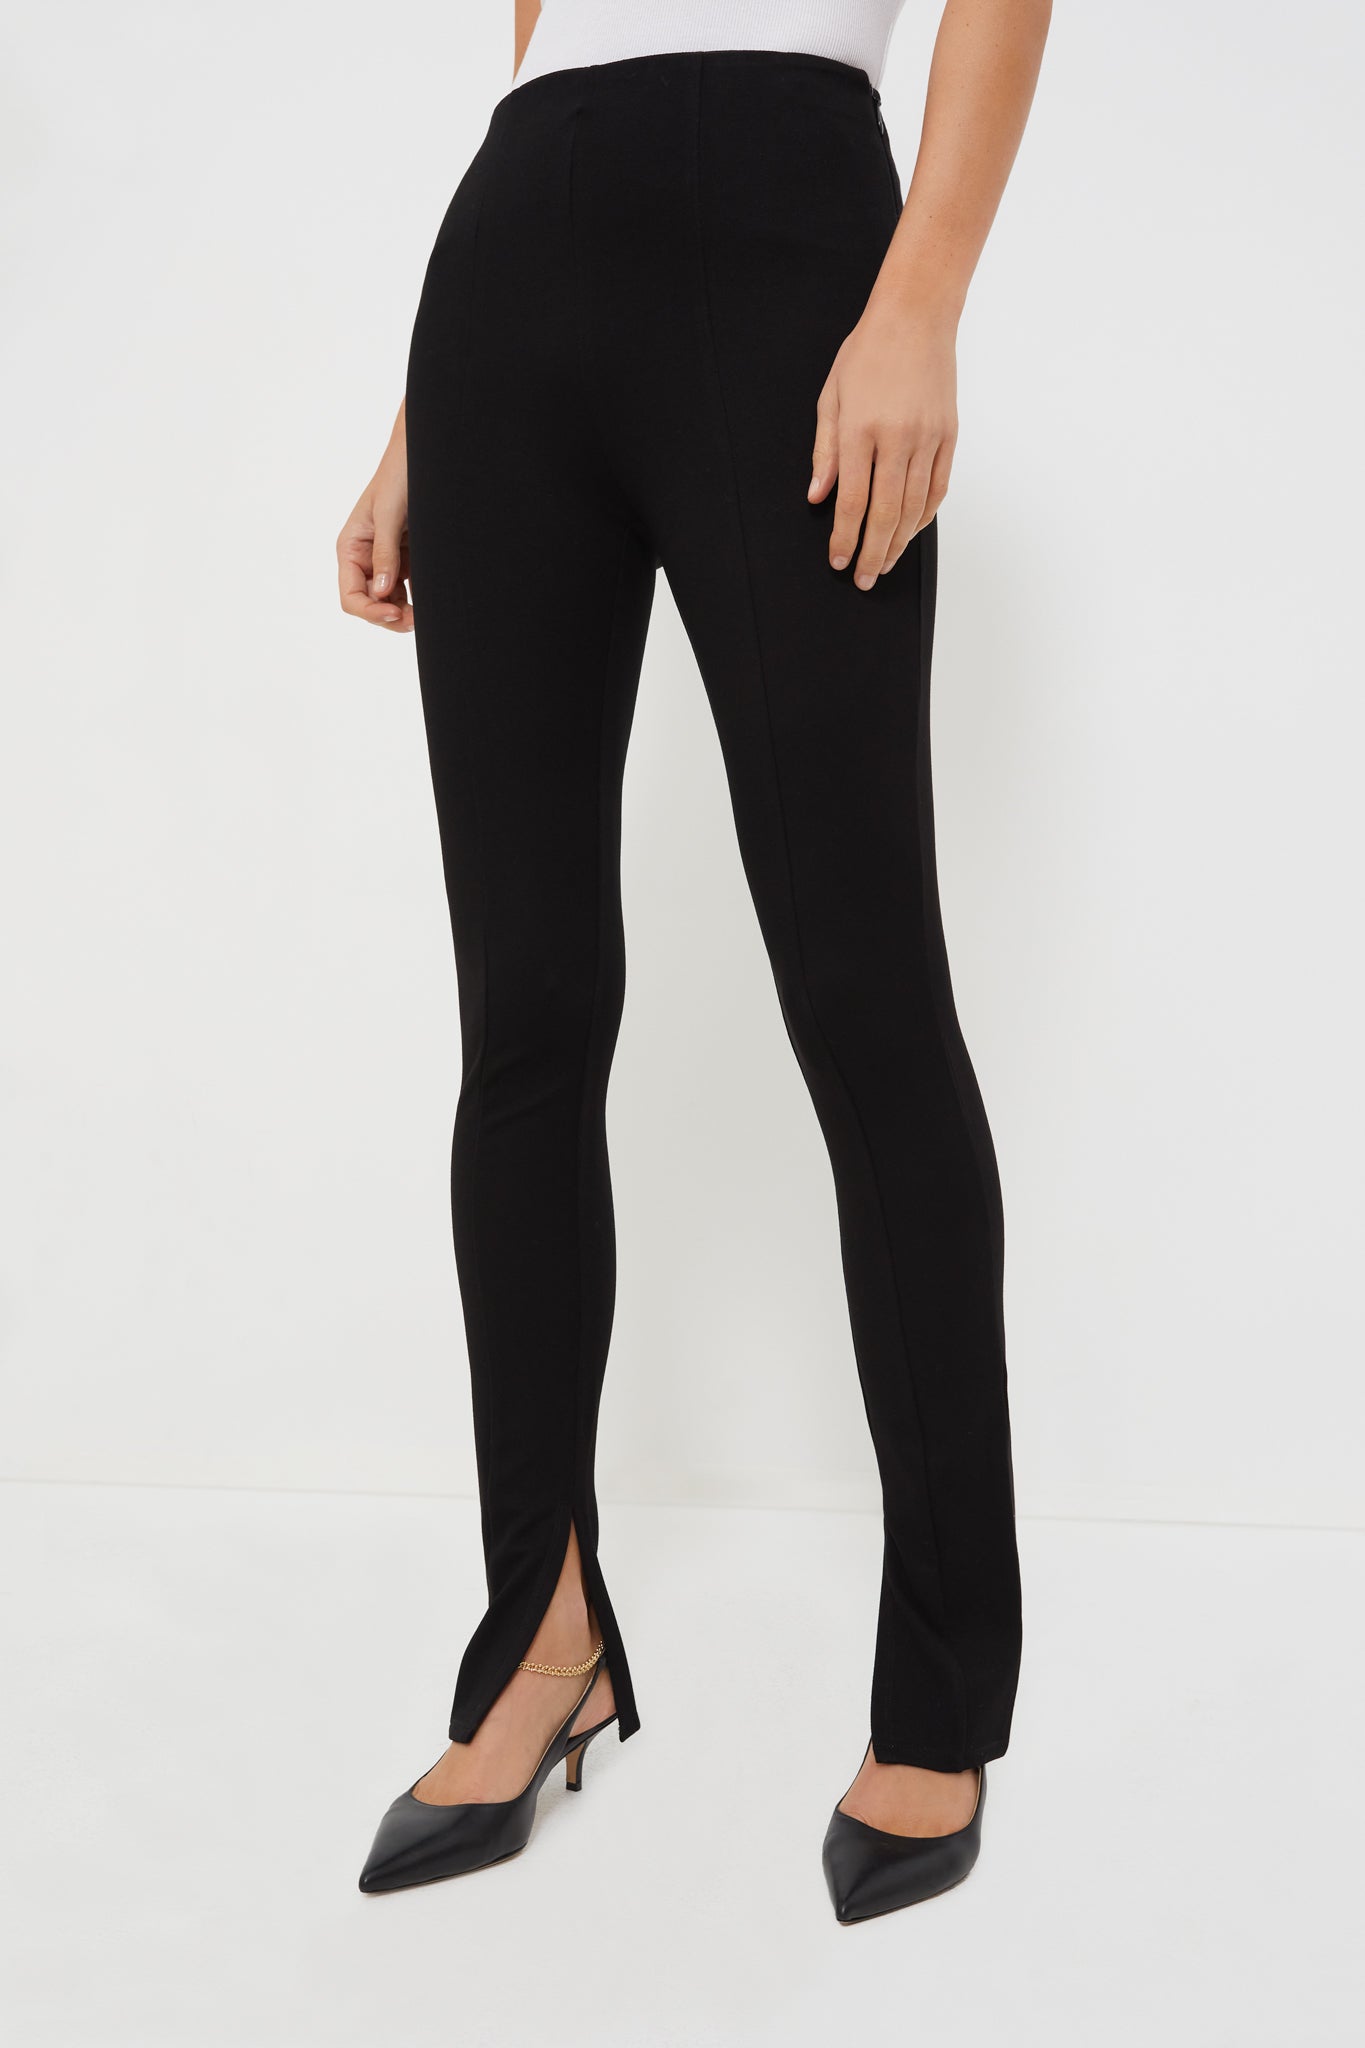 Fashion 2 In 1 Full Length Ladies Leggings - Black